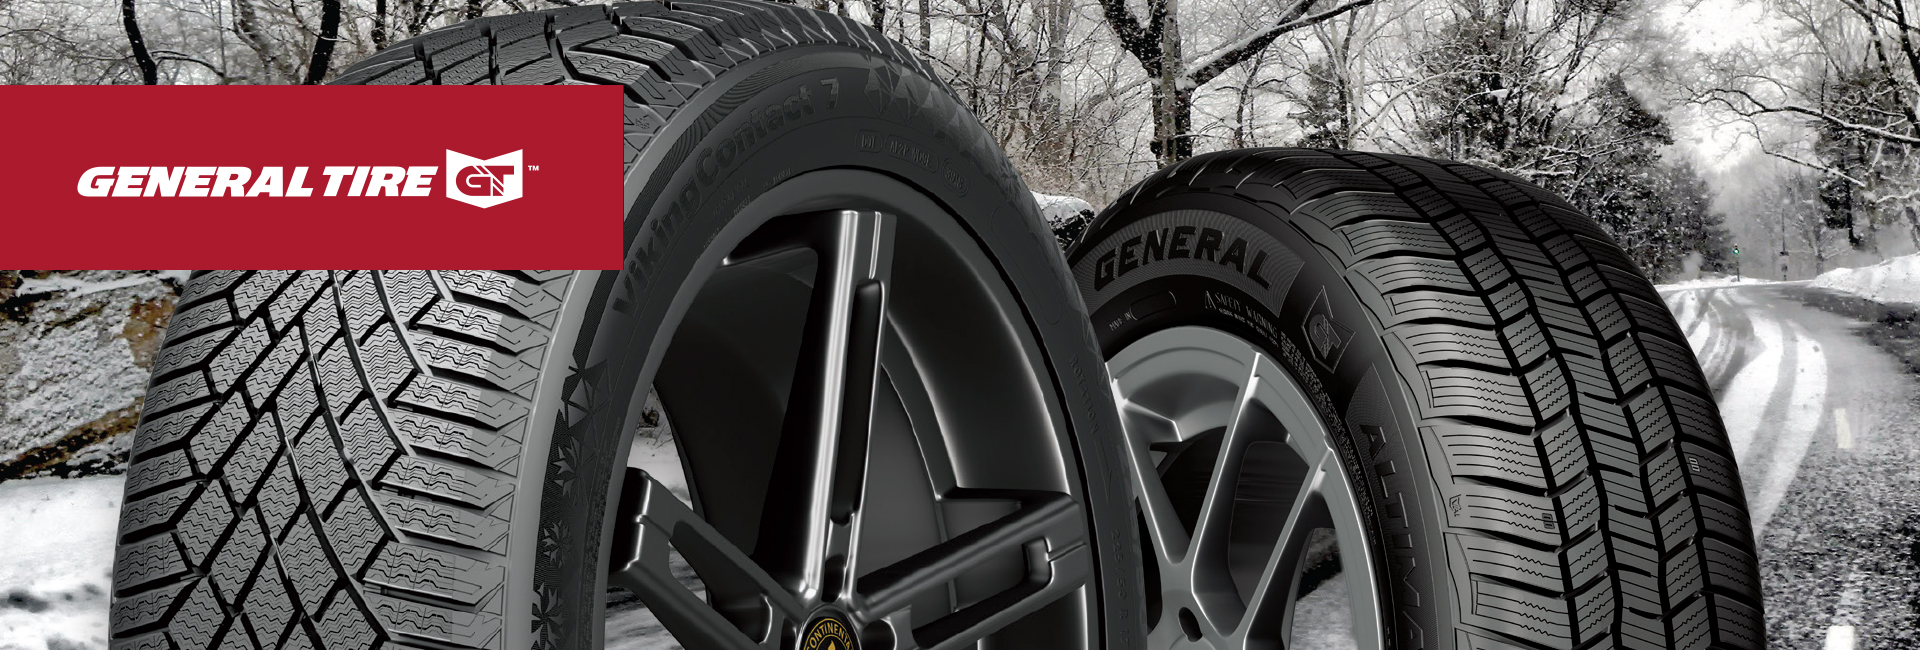 General Tire Rebate Fall 2021 OK Tire